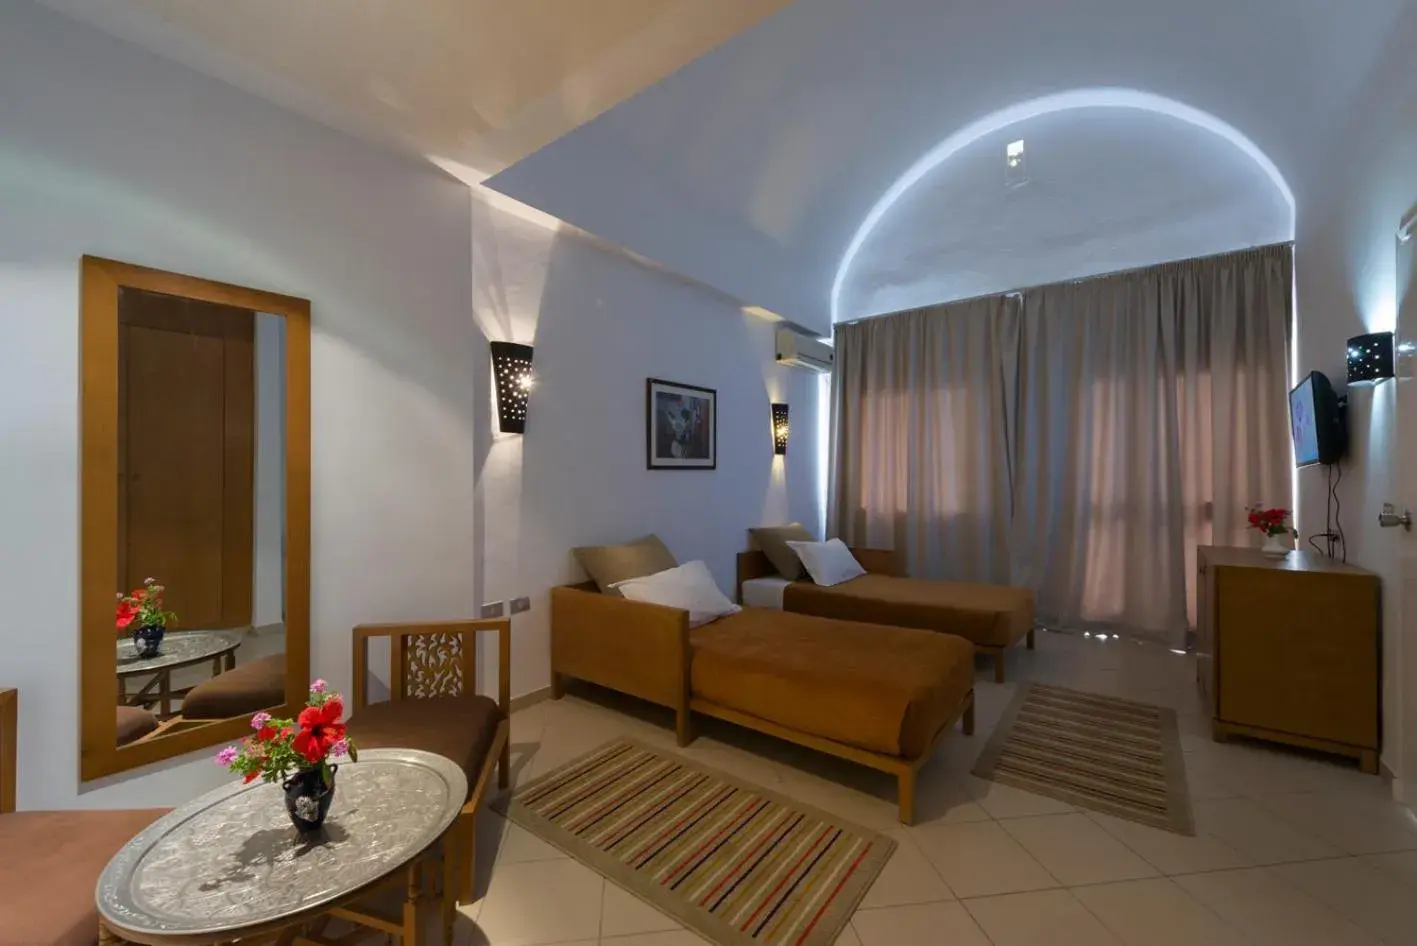 Bedroom in Hotel El Fell